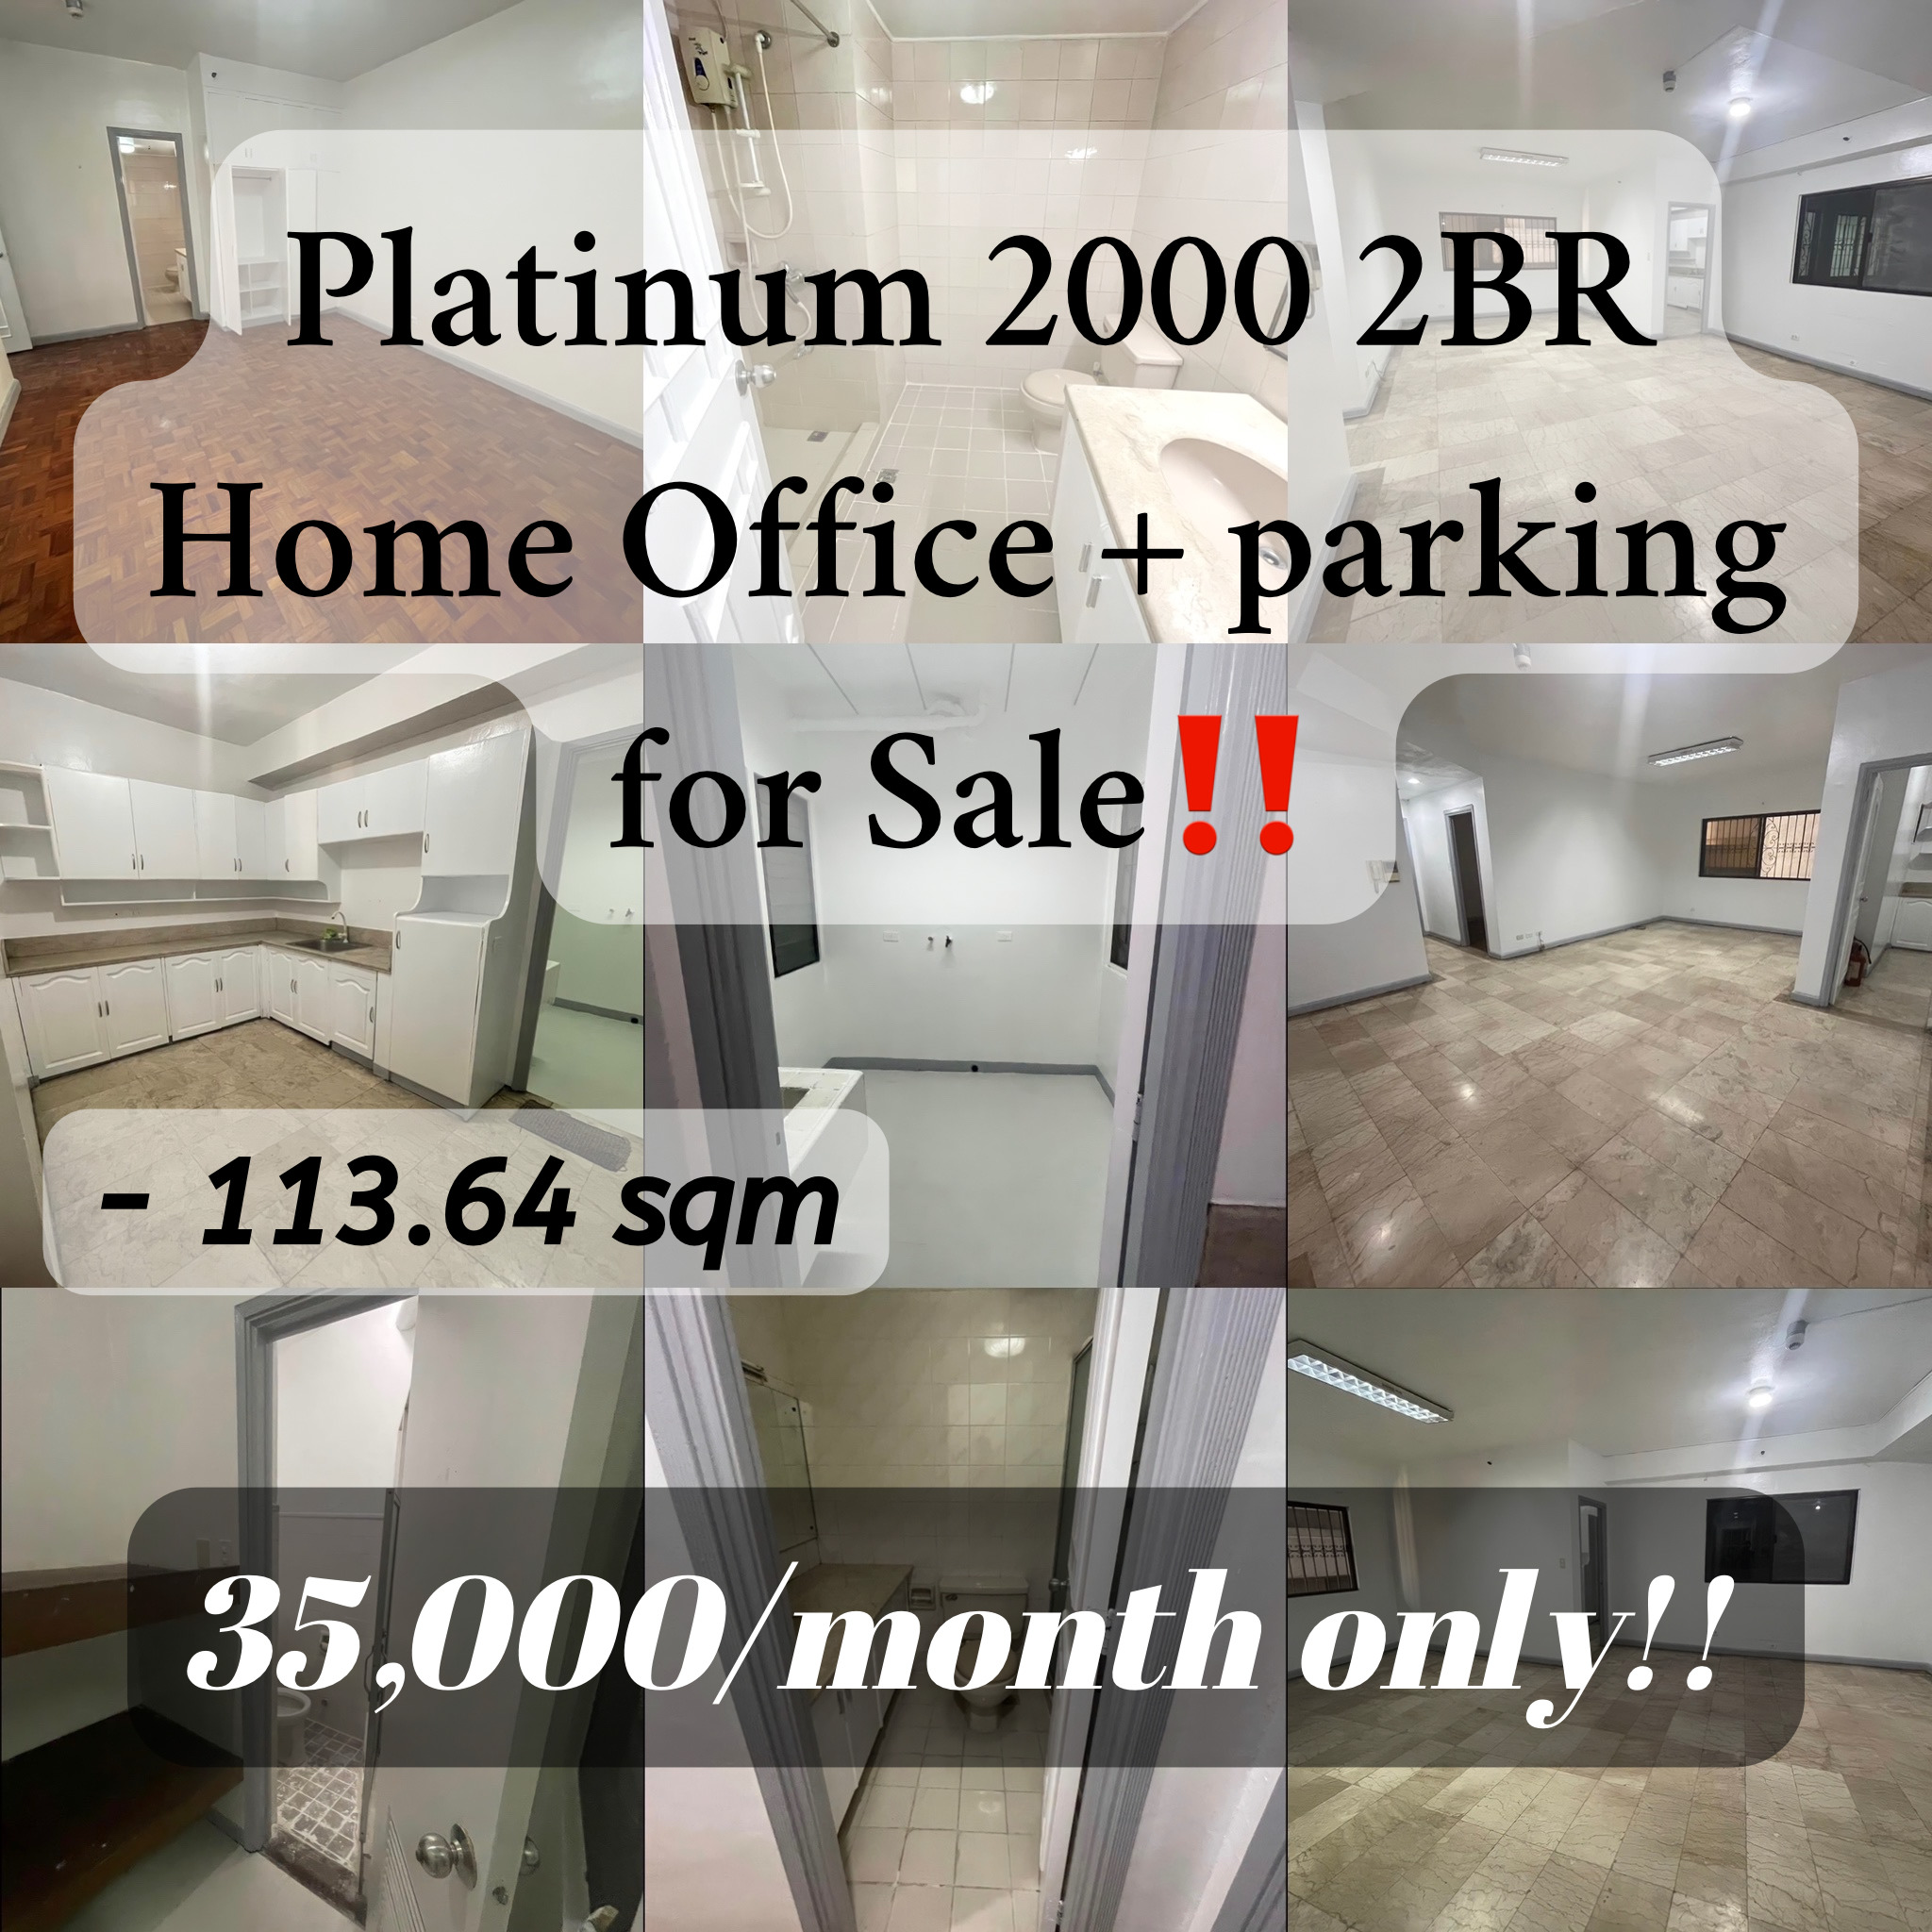 Platinum 2000 2BR Home Office + parking